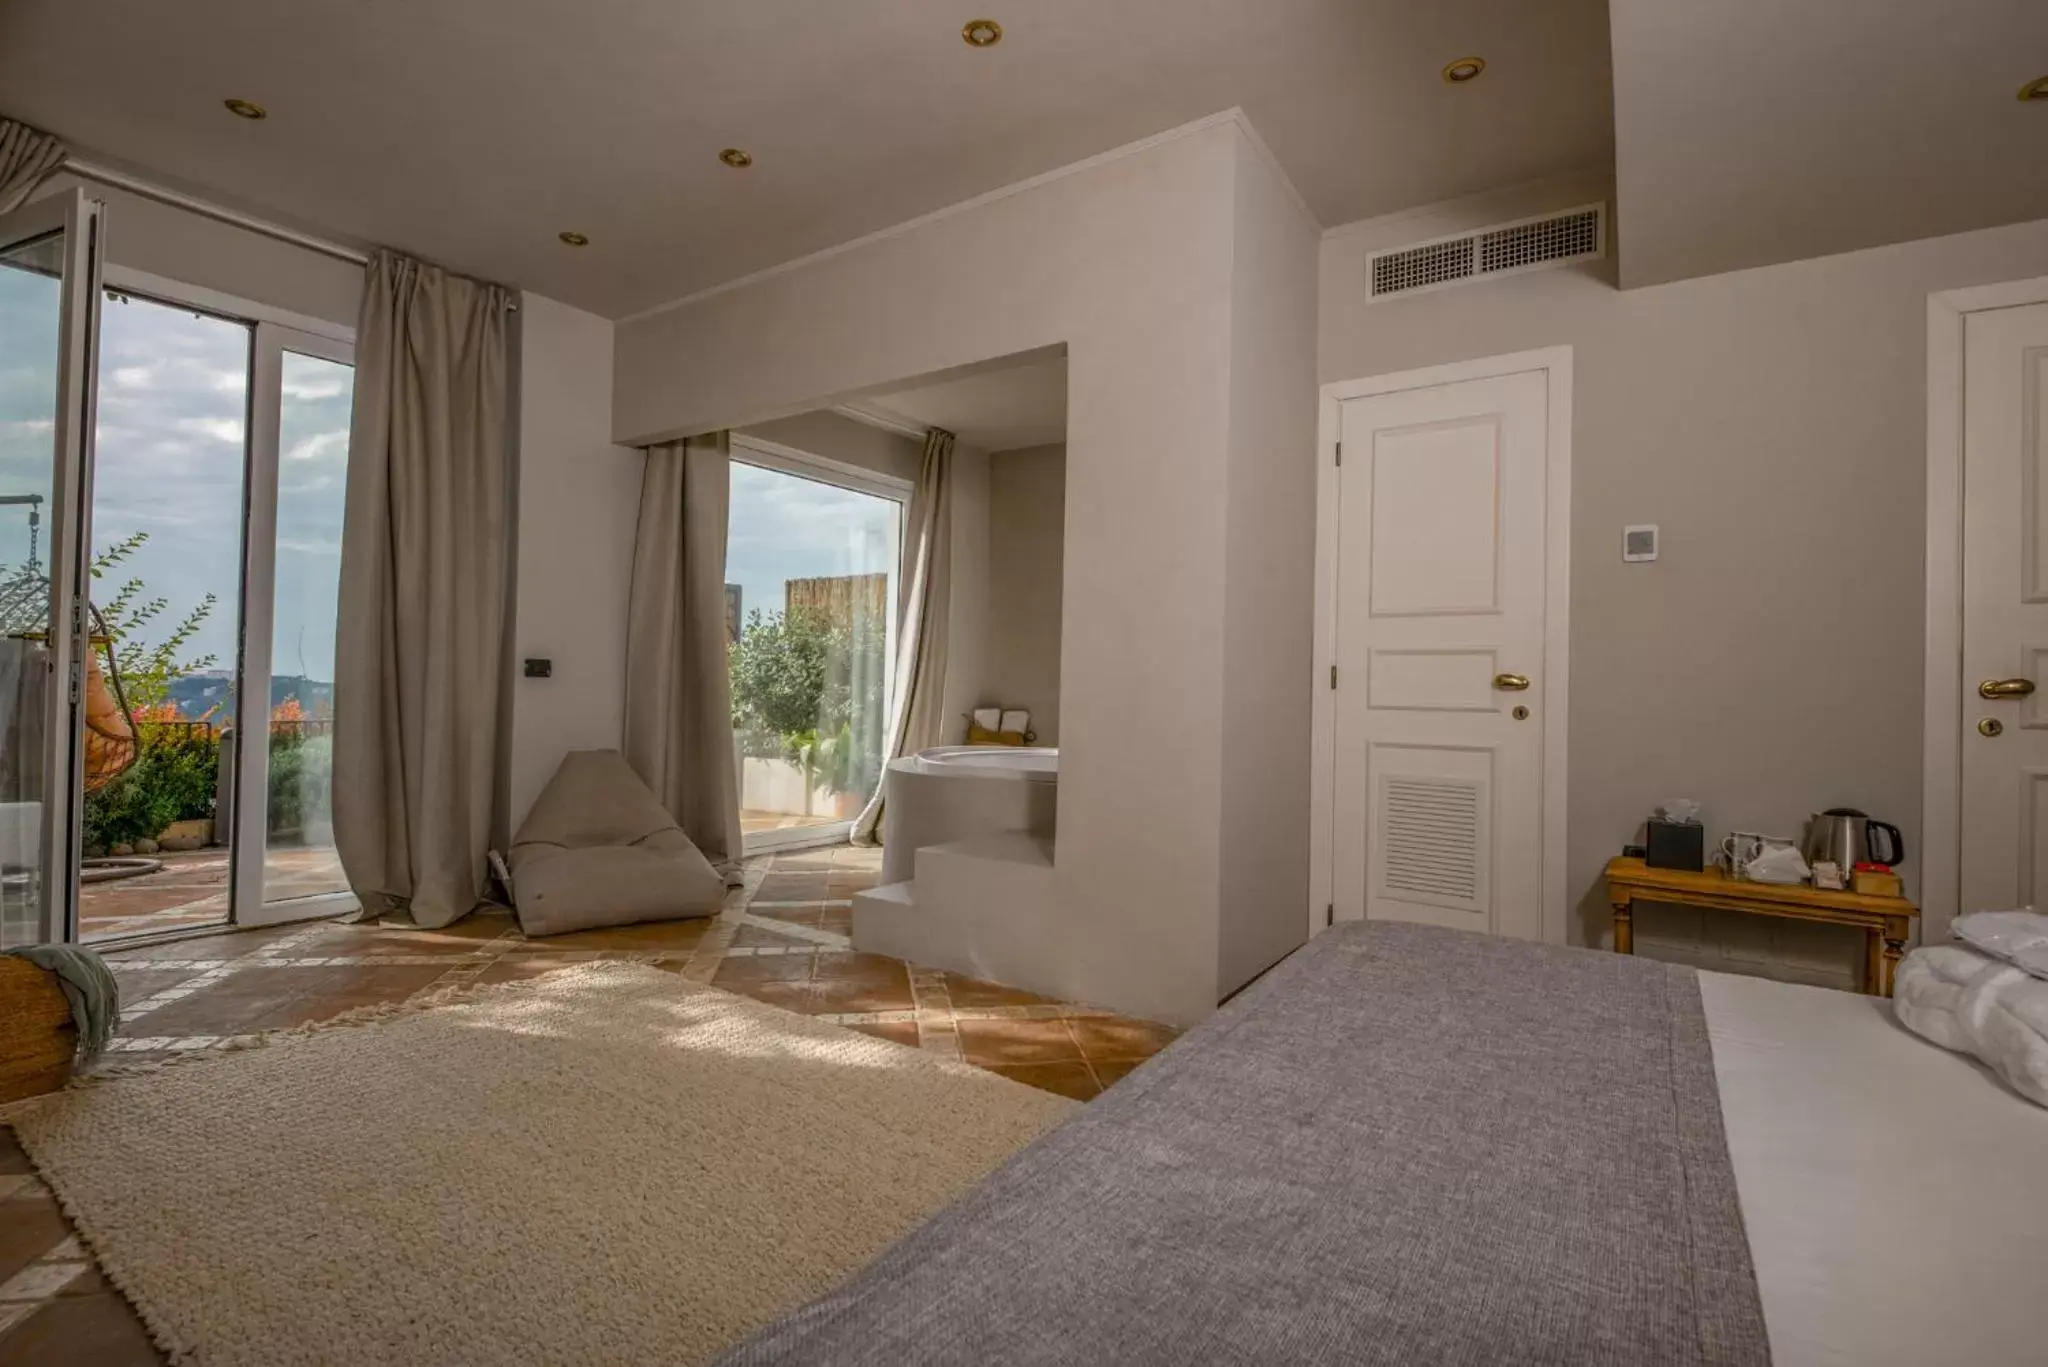 Photo of the whole room in La Locanda Del Pontefice - Luxury Country House